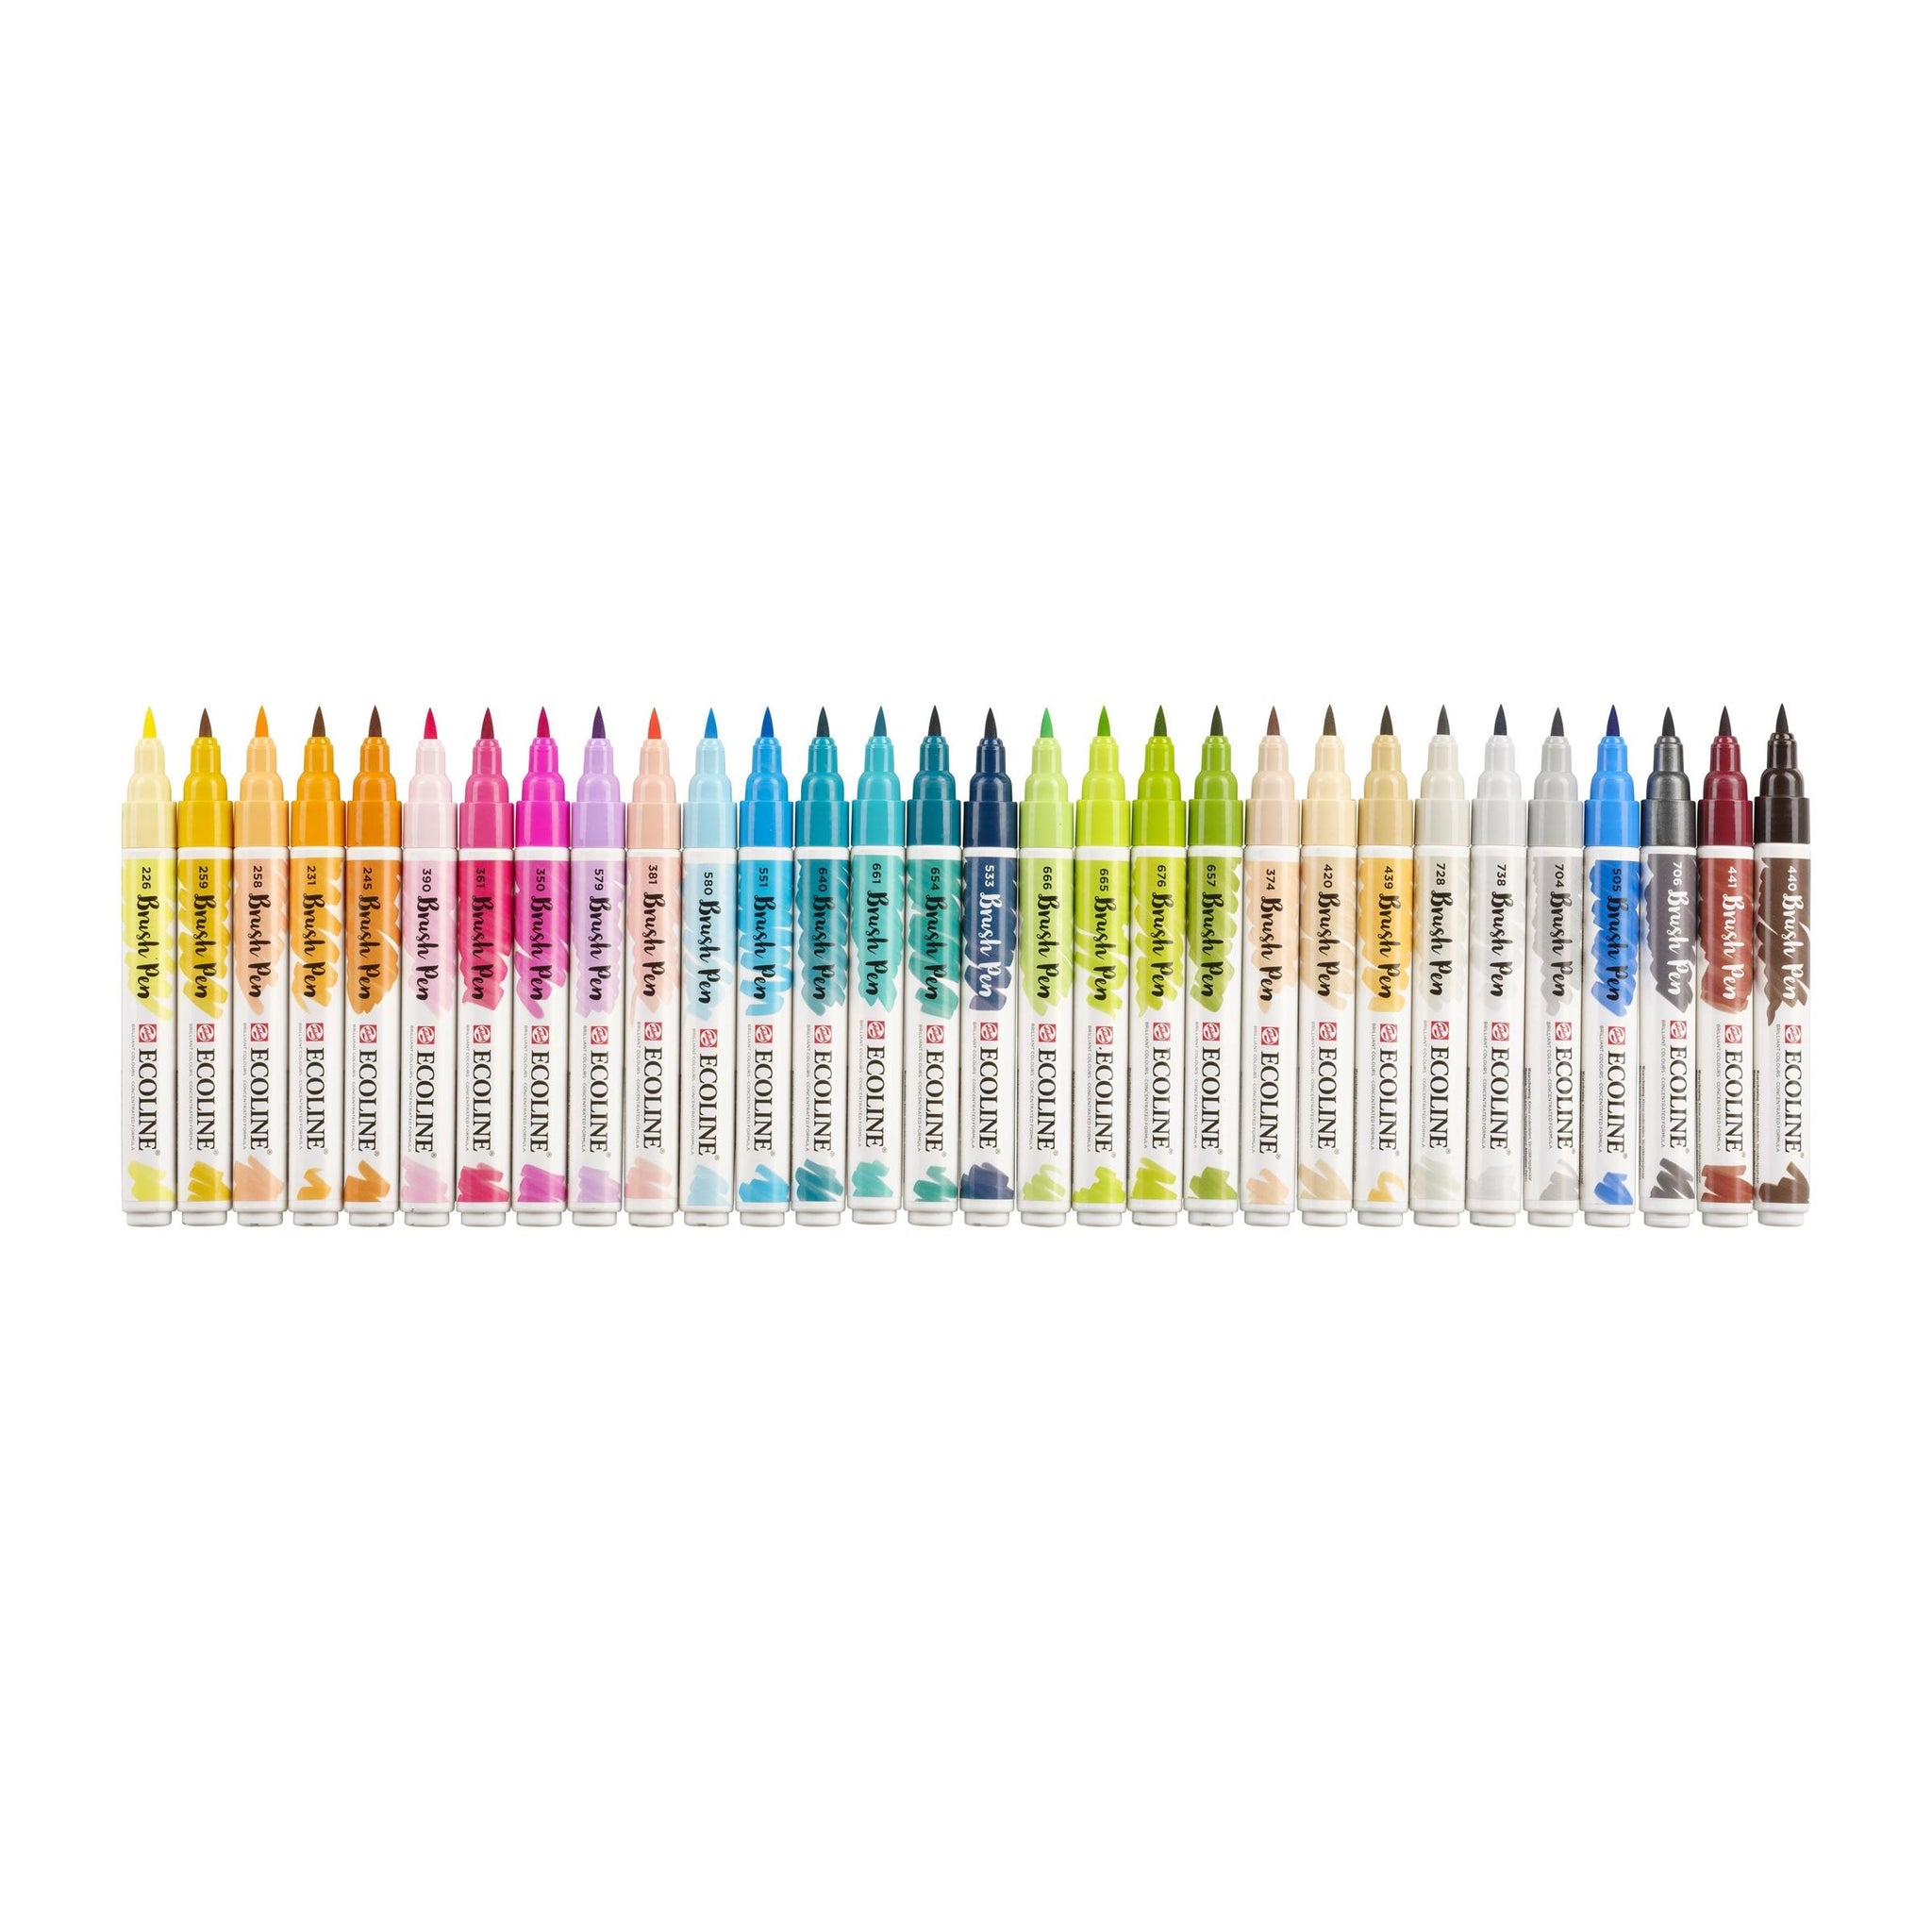 Royal Talens Ecoline Watercolor Brush Pens